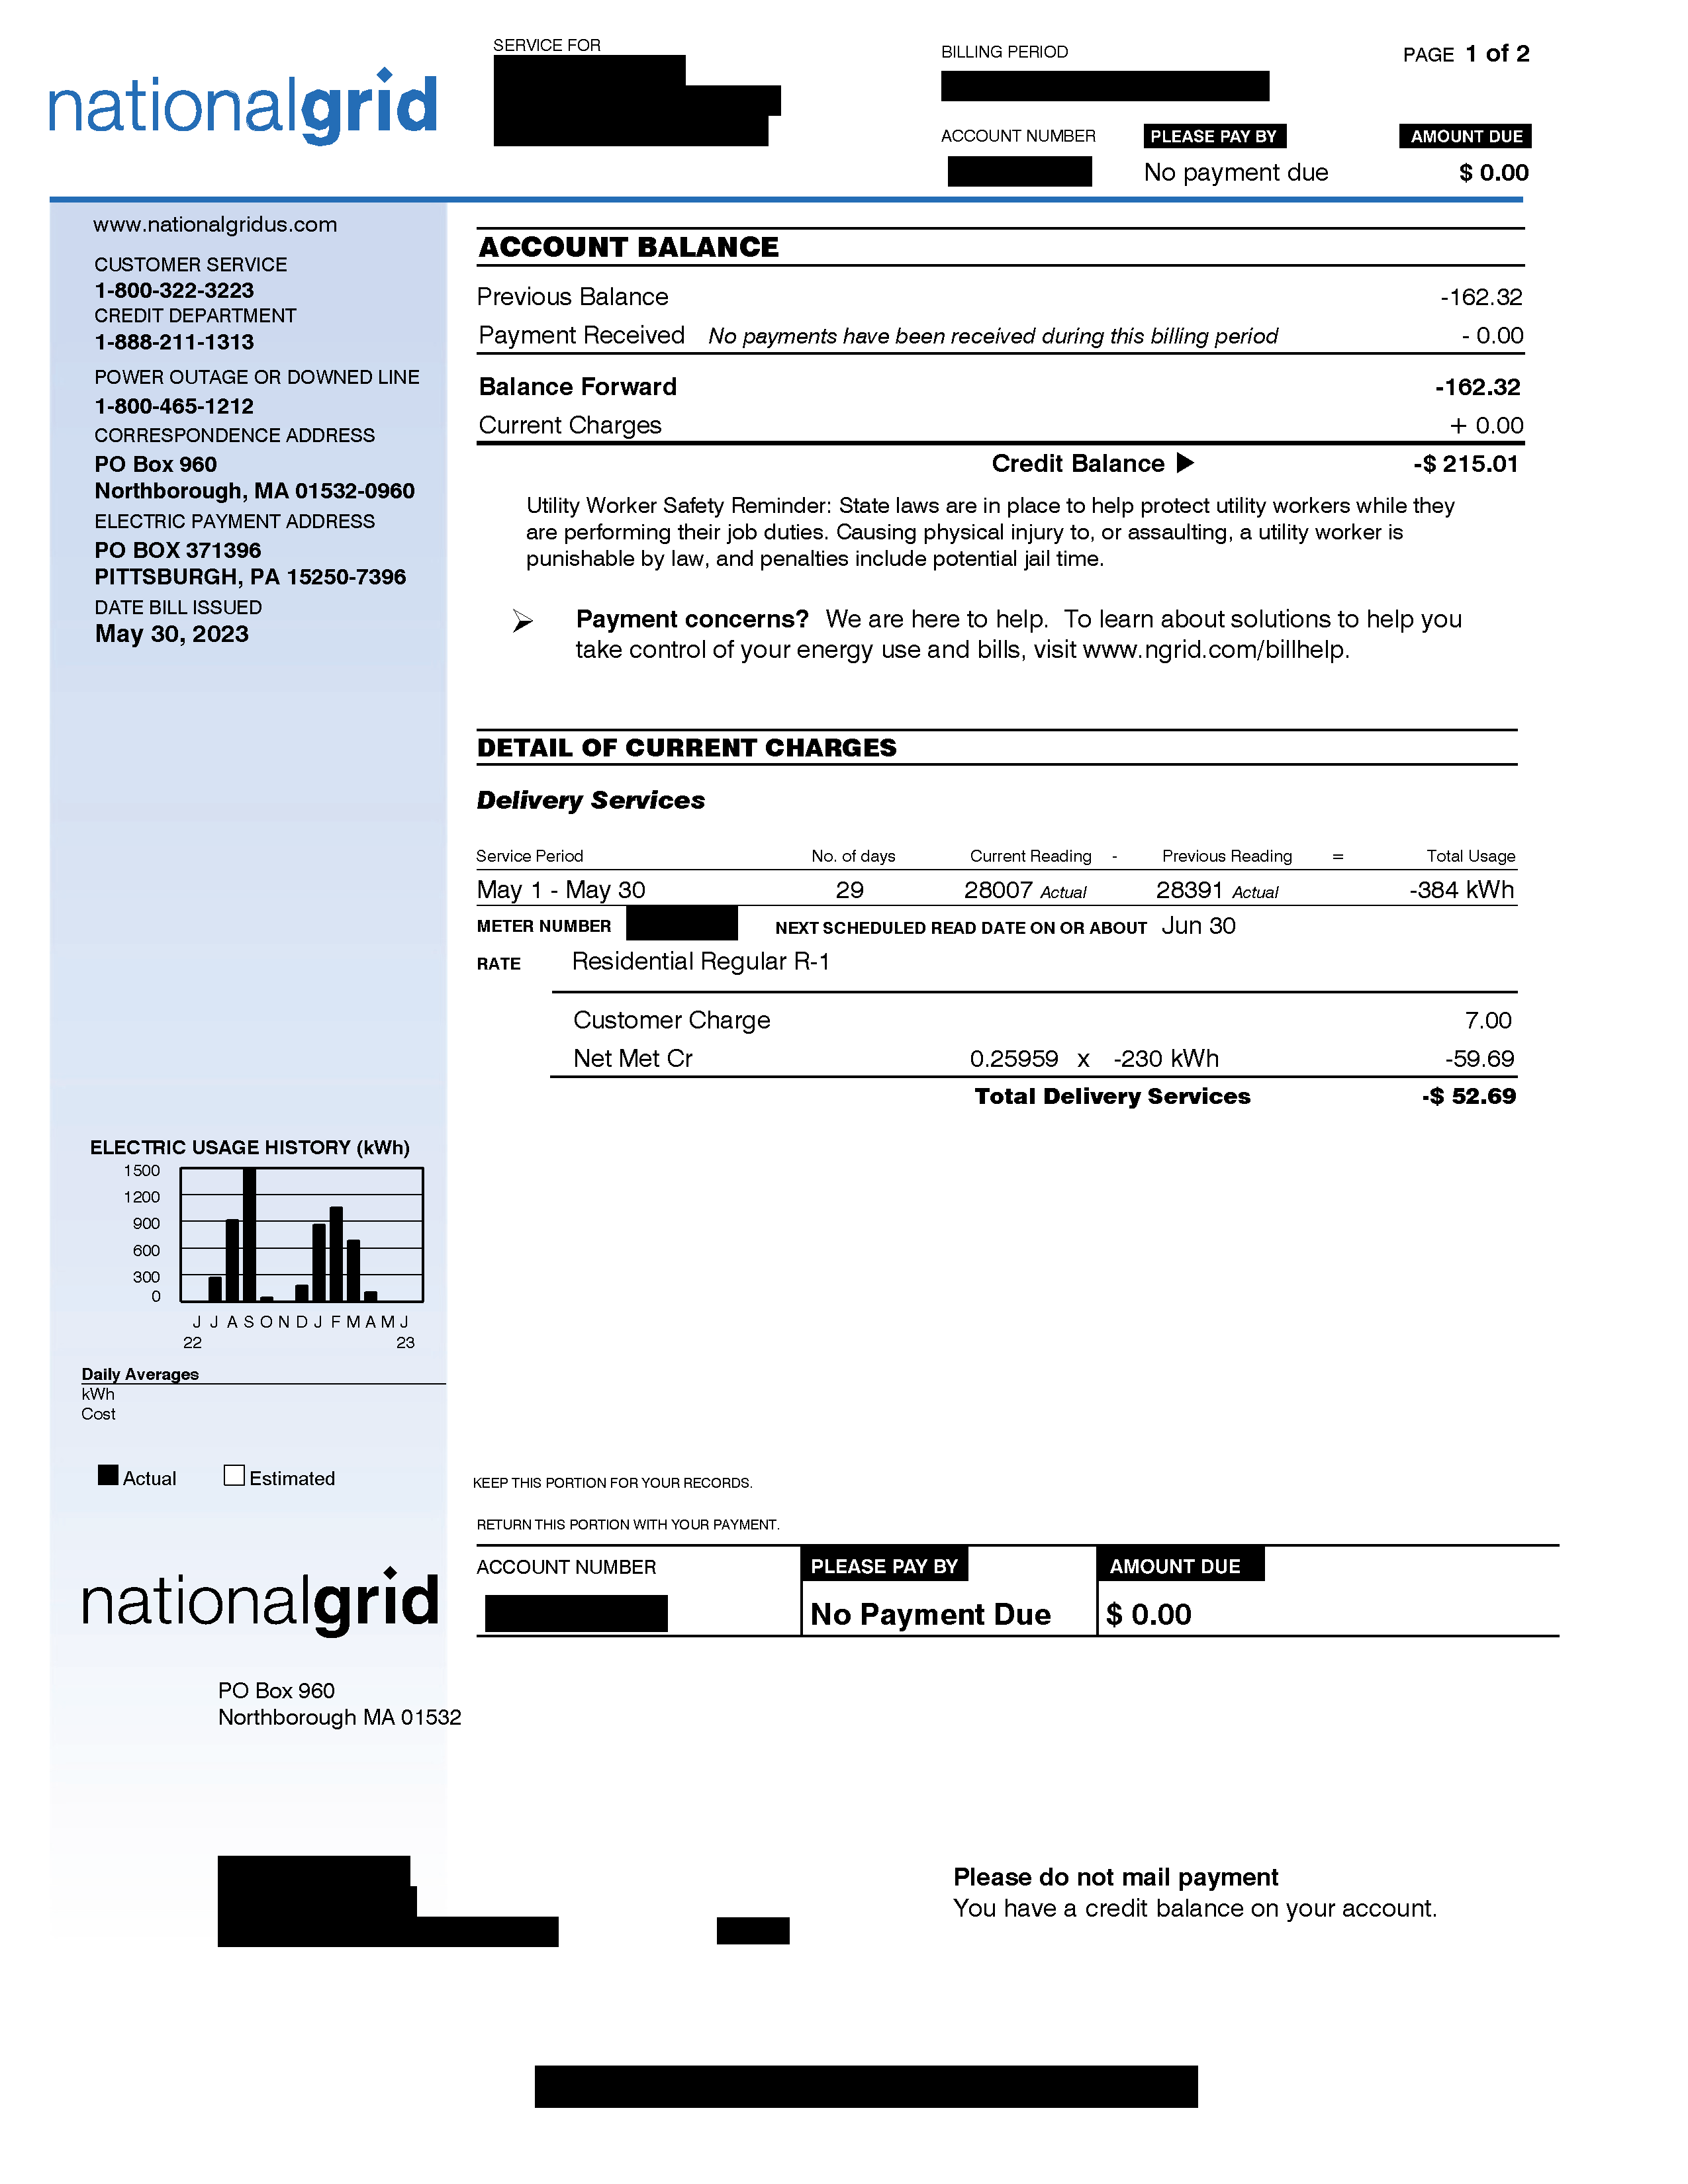 Solar Market Net Metering Bill  - Page One